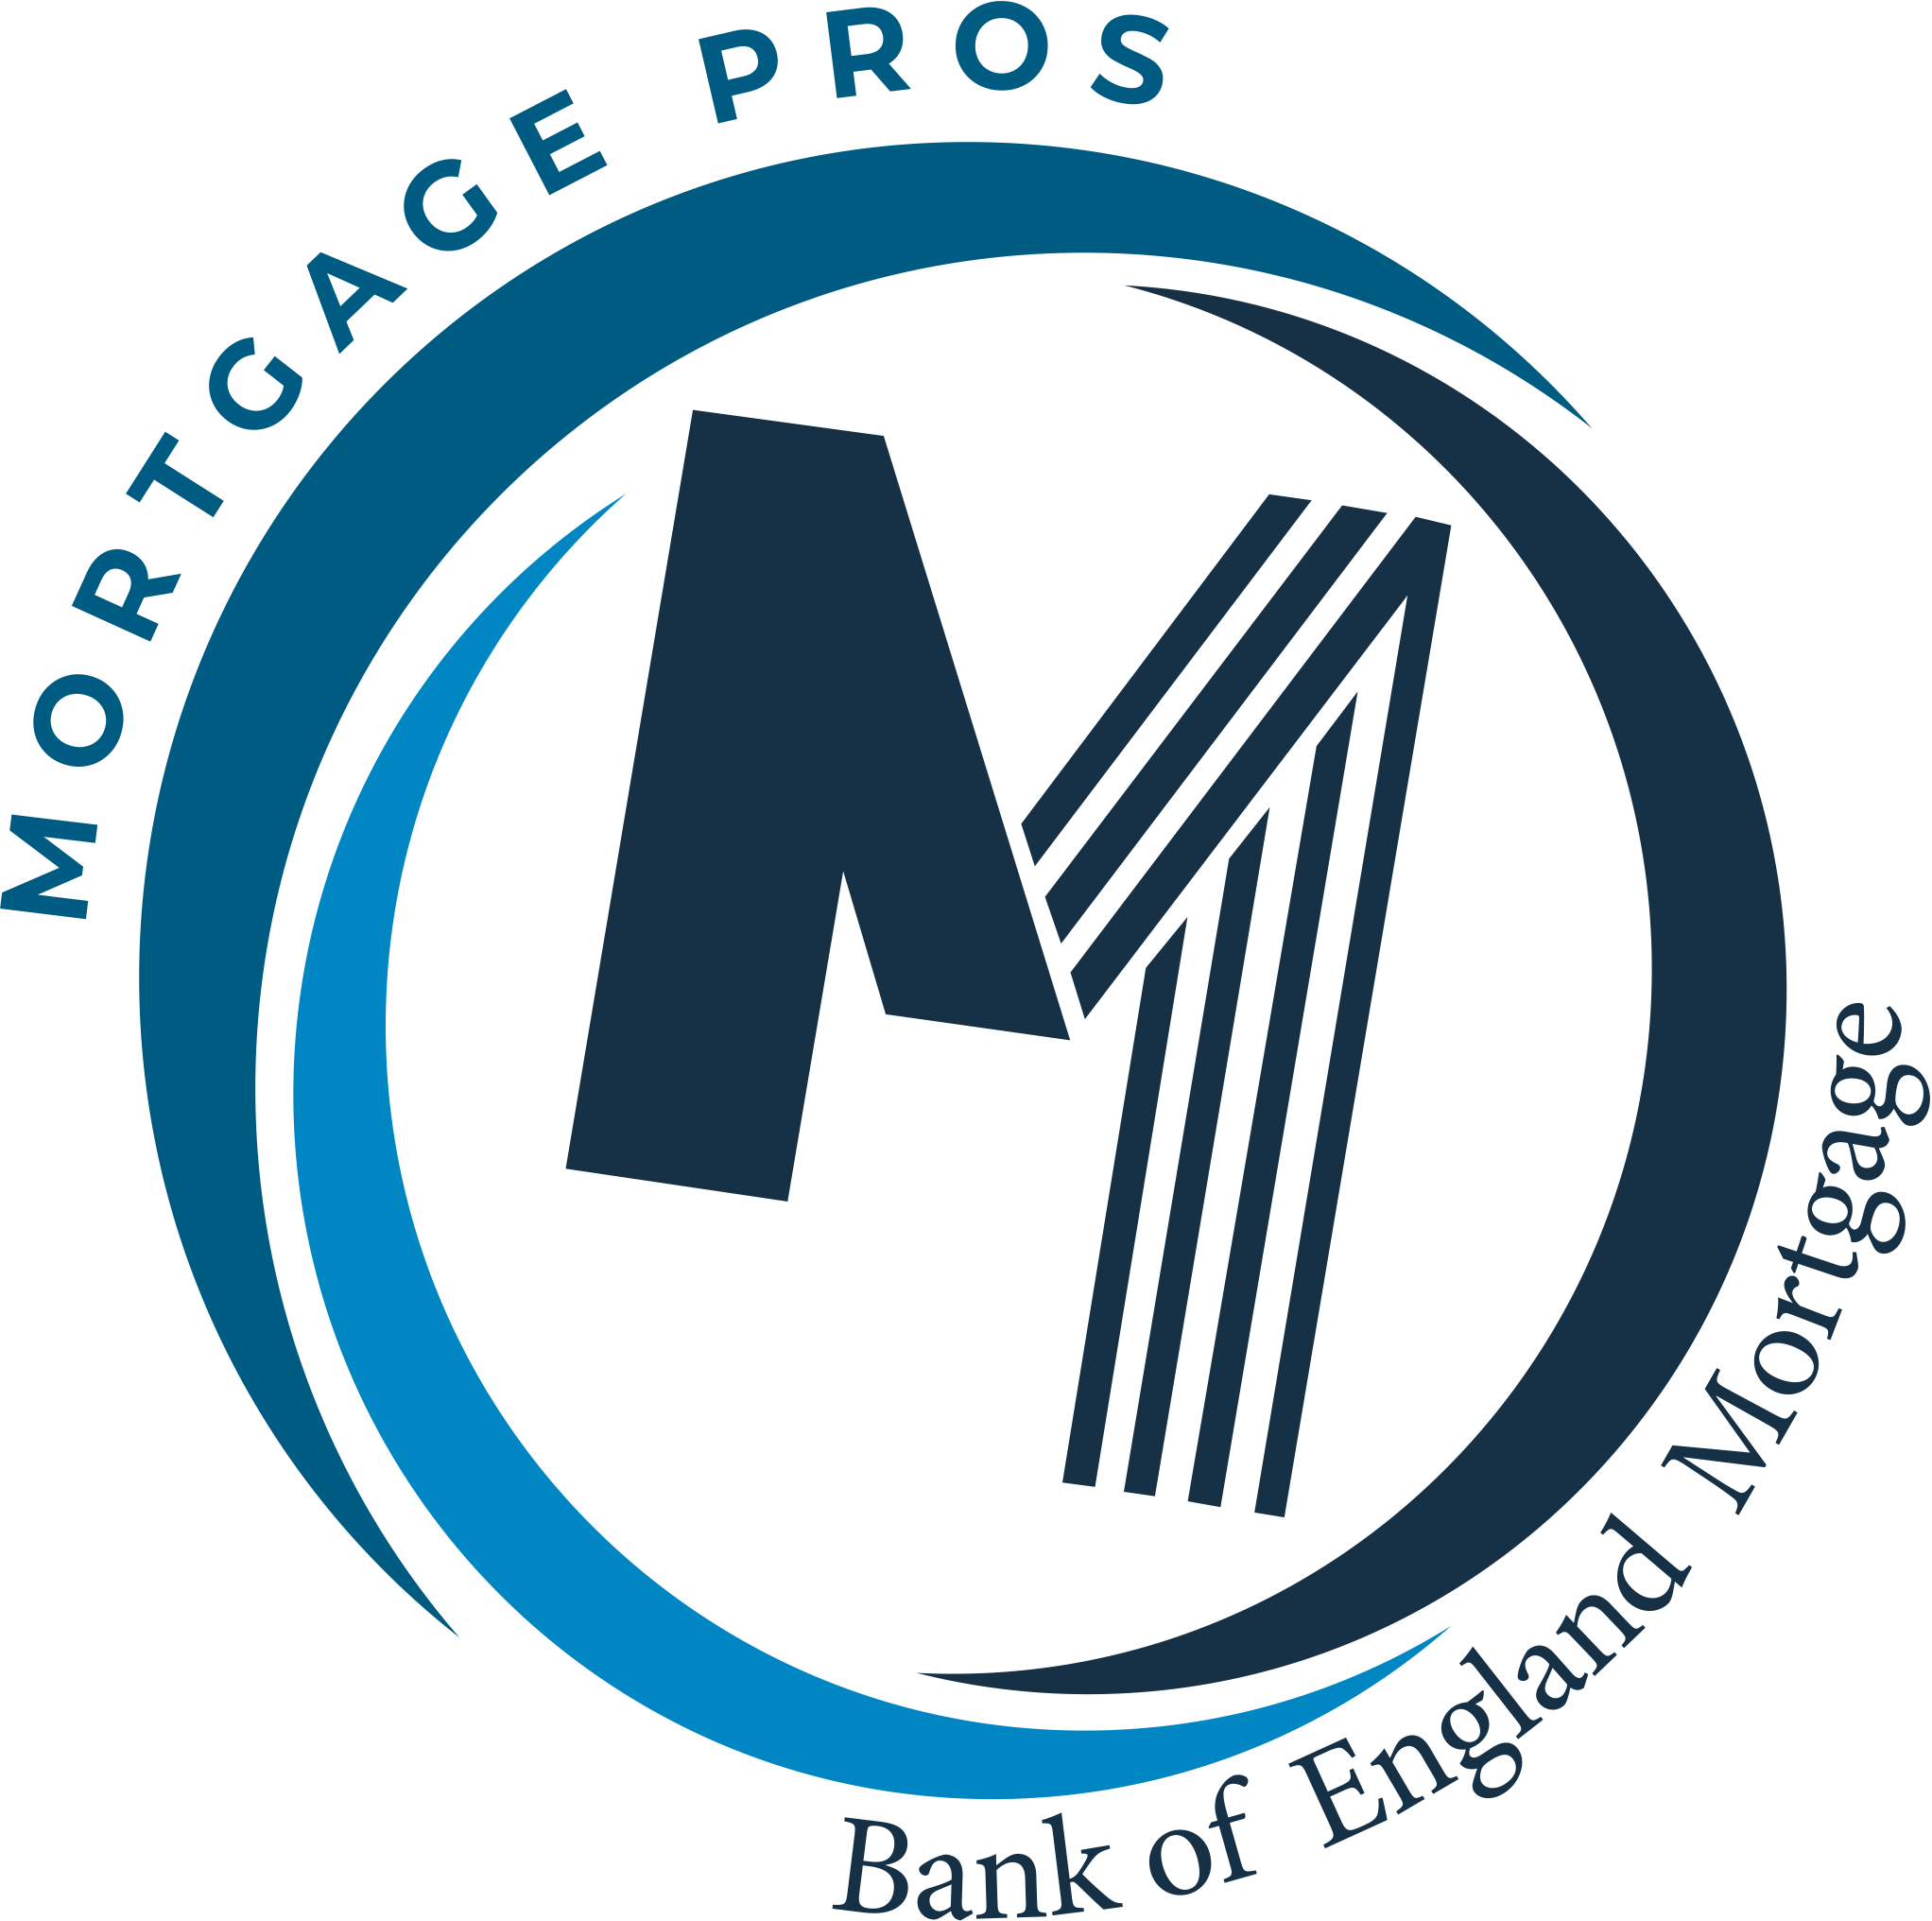 BOE Mortgage Logo